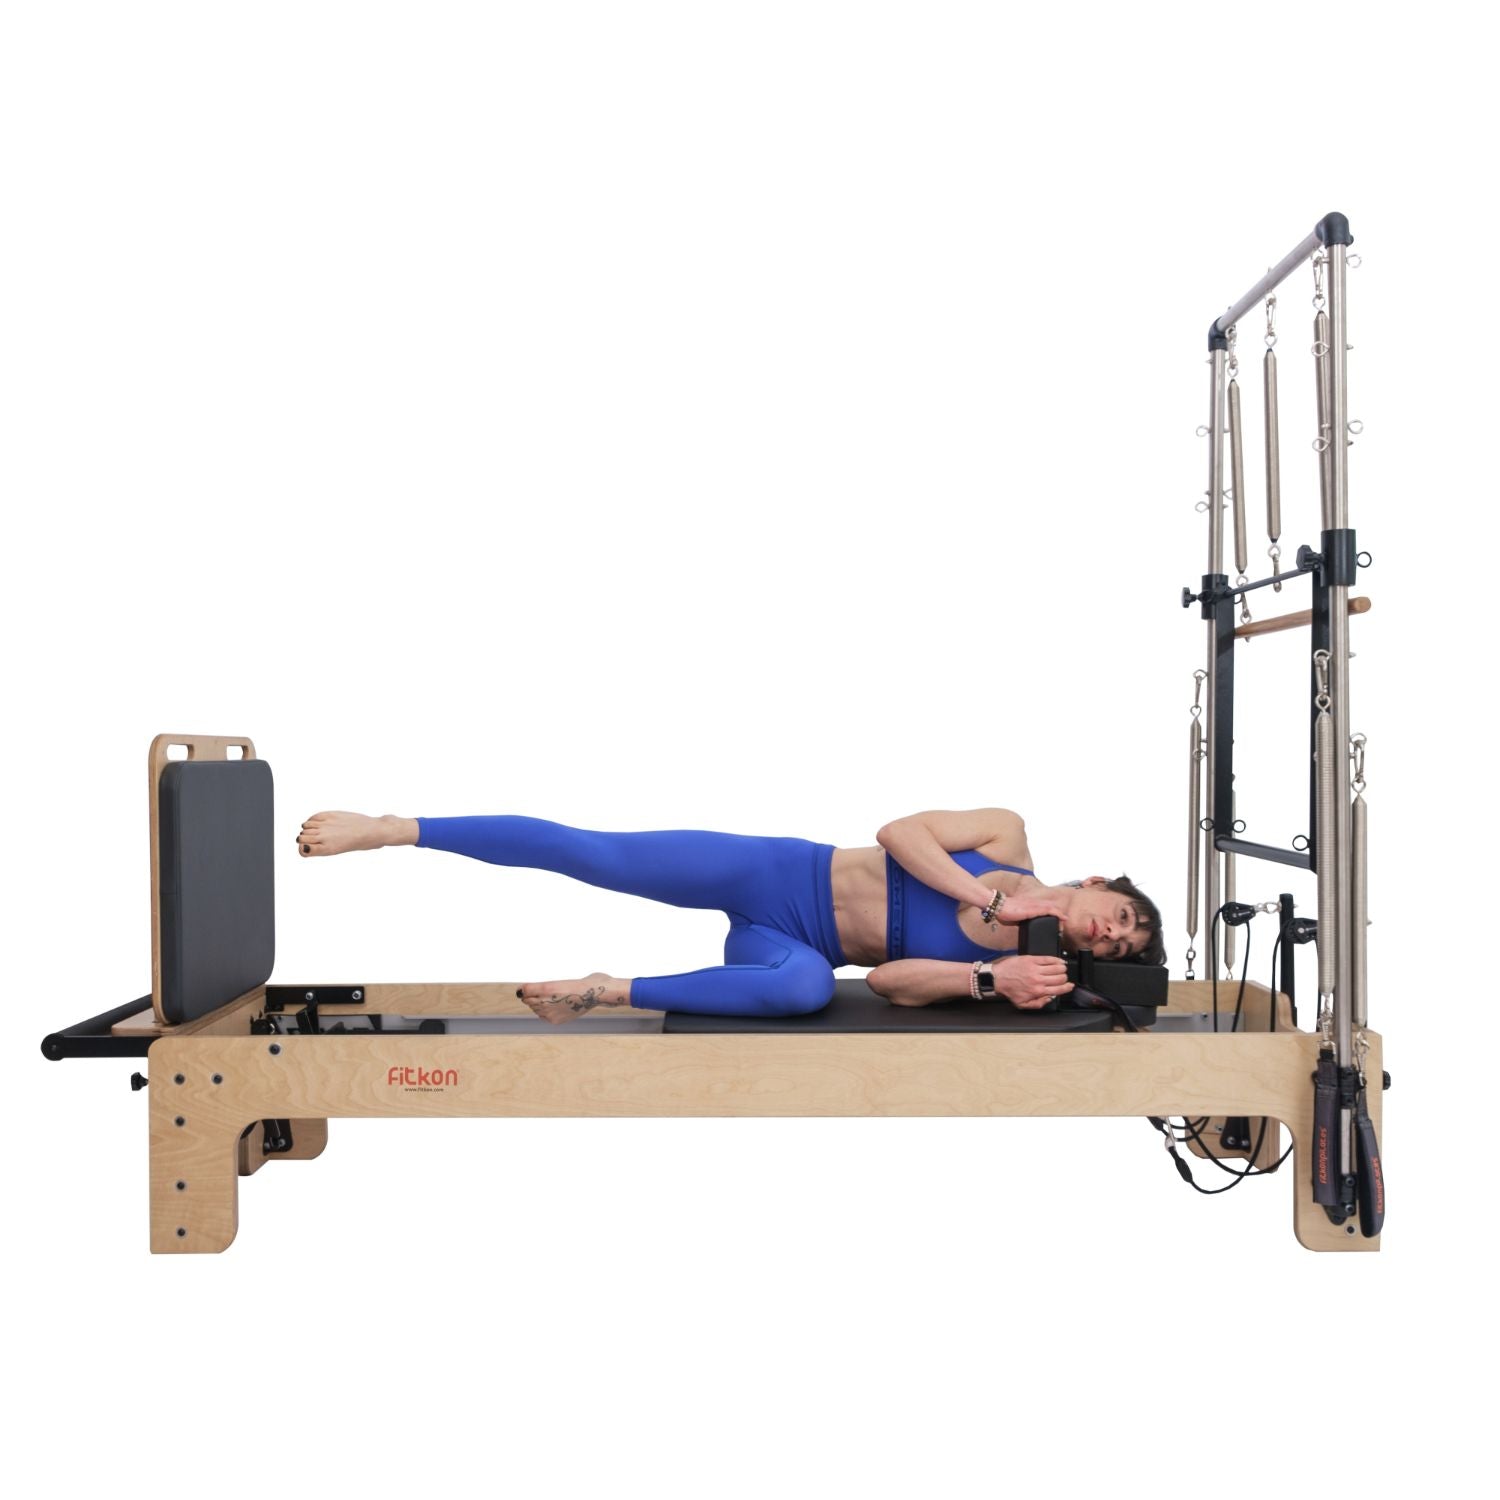 Pilates power gym pro reformer - Pilates Machines - Austin, Texas, Facebook Marketplace